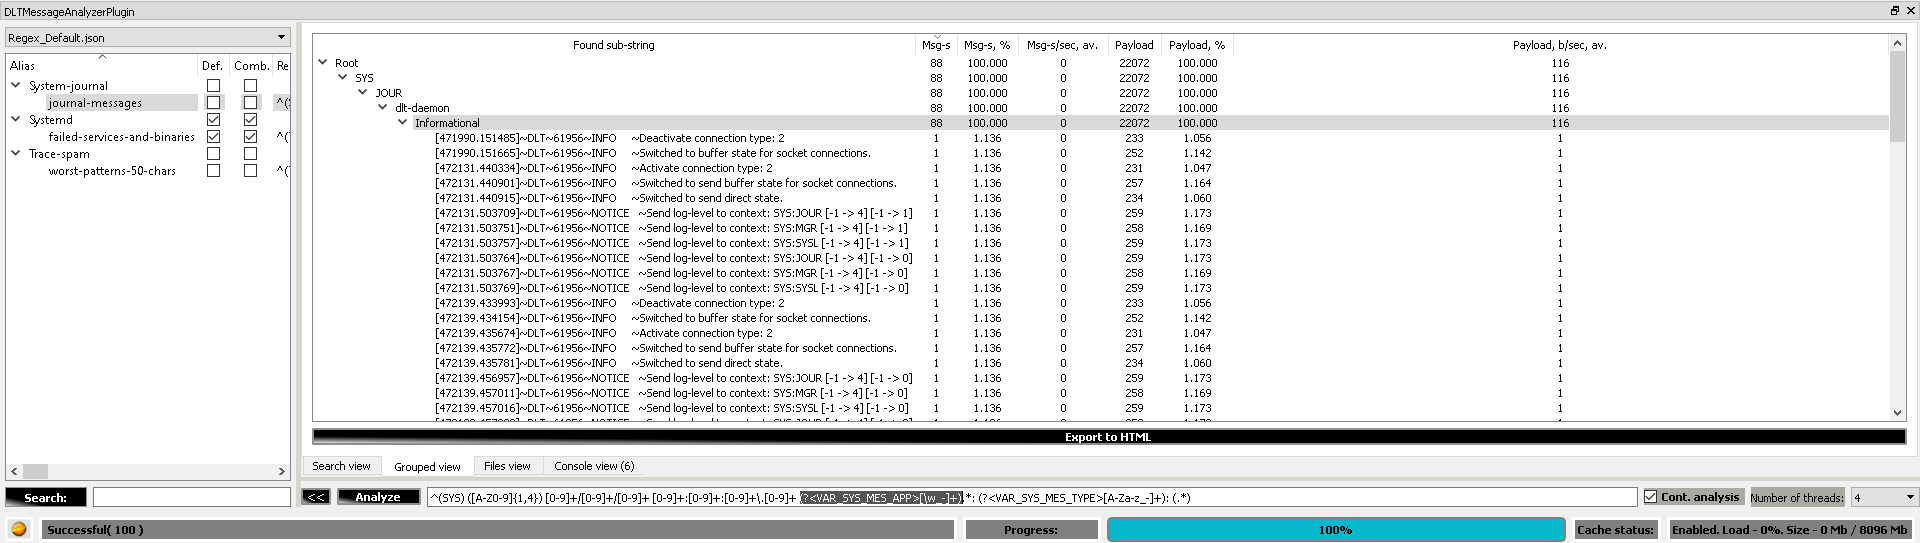 Screenshot of DLT Message Analyzer plugin - Grouped view